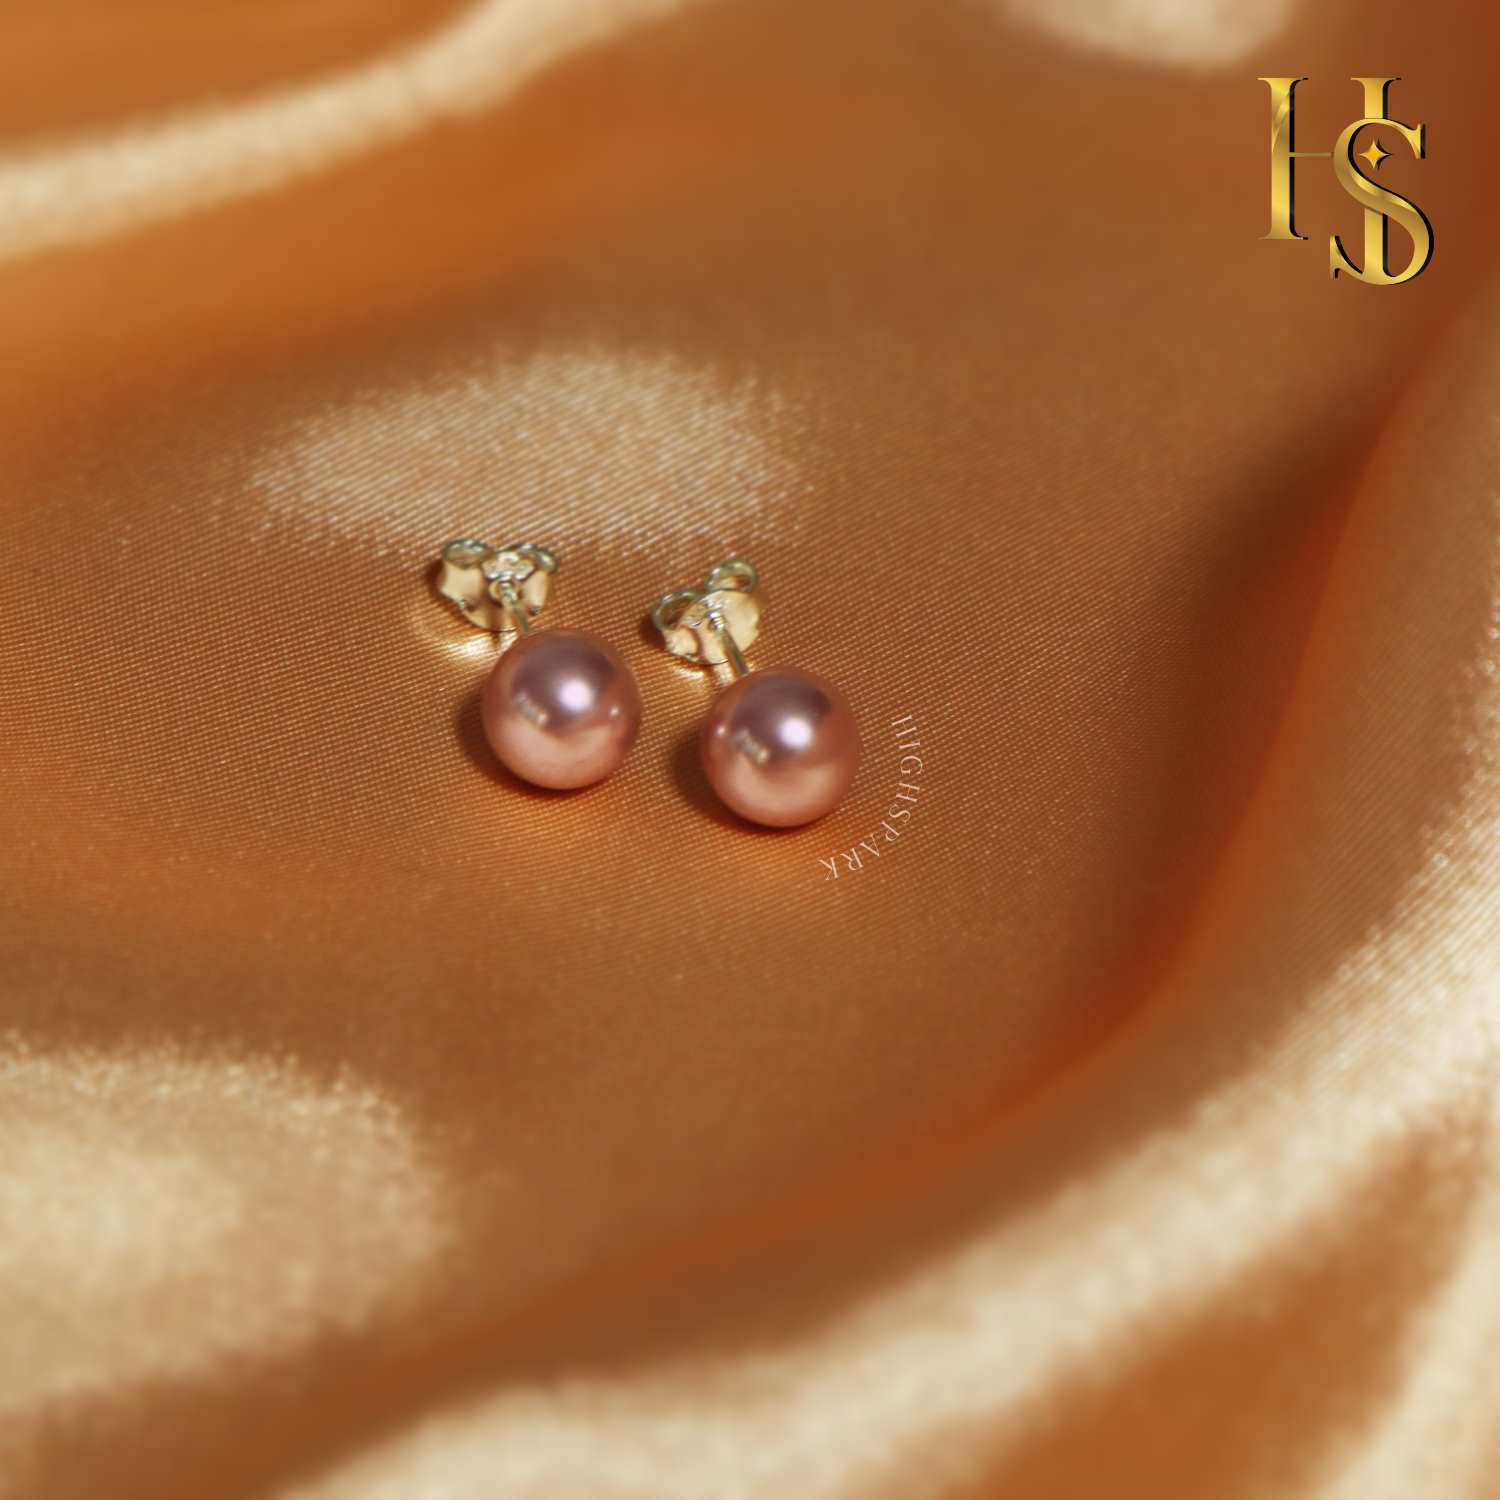 Pearl Classic Stud Earrings - Brilliant Lustre Rose Gold Pearls